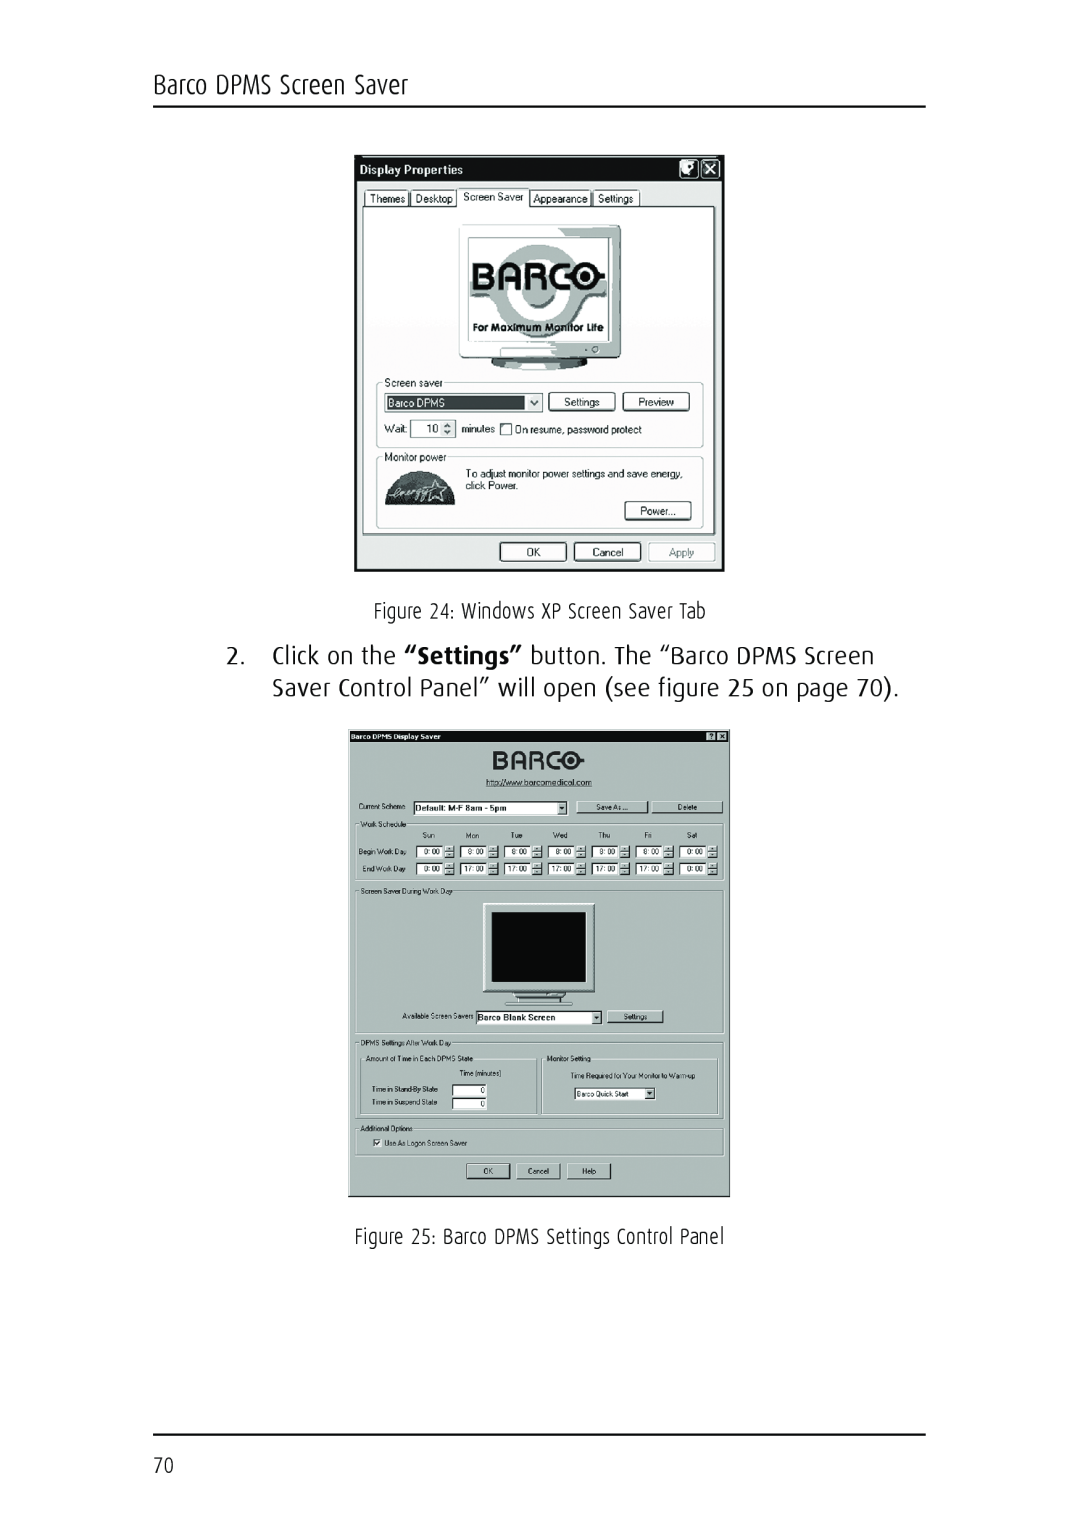 Barco MGP 15 user manual Barco DPMS Screen Saver, Windows XP Screen Saver Tab, Barco DPMS Settings Control Panel 